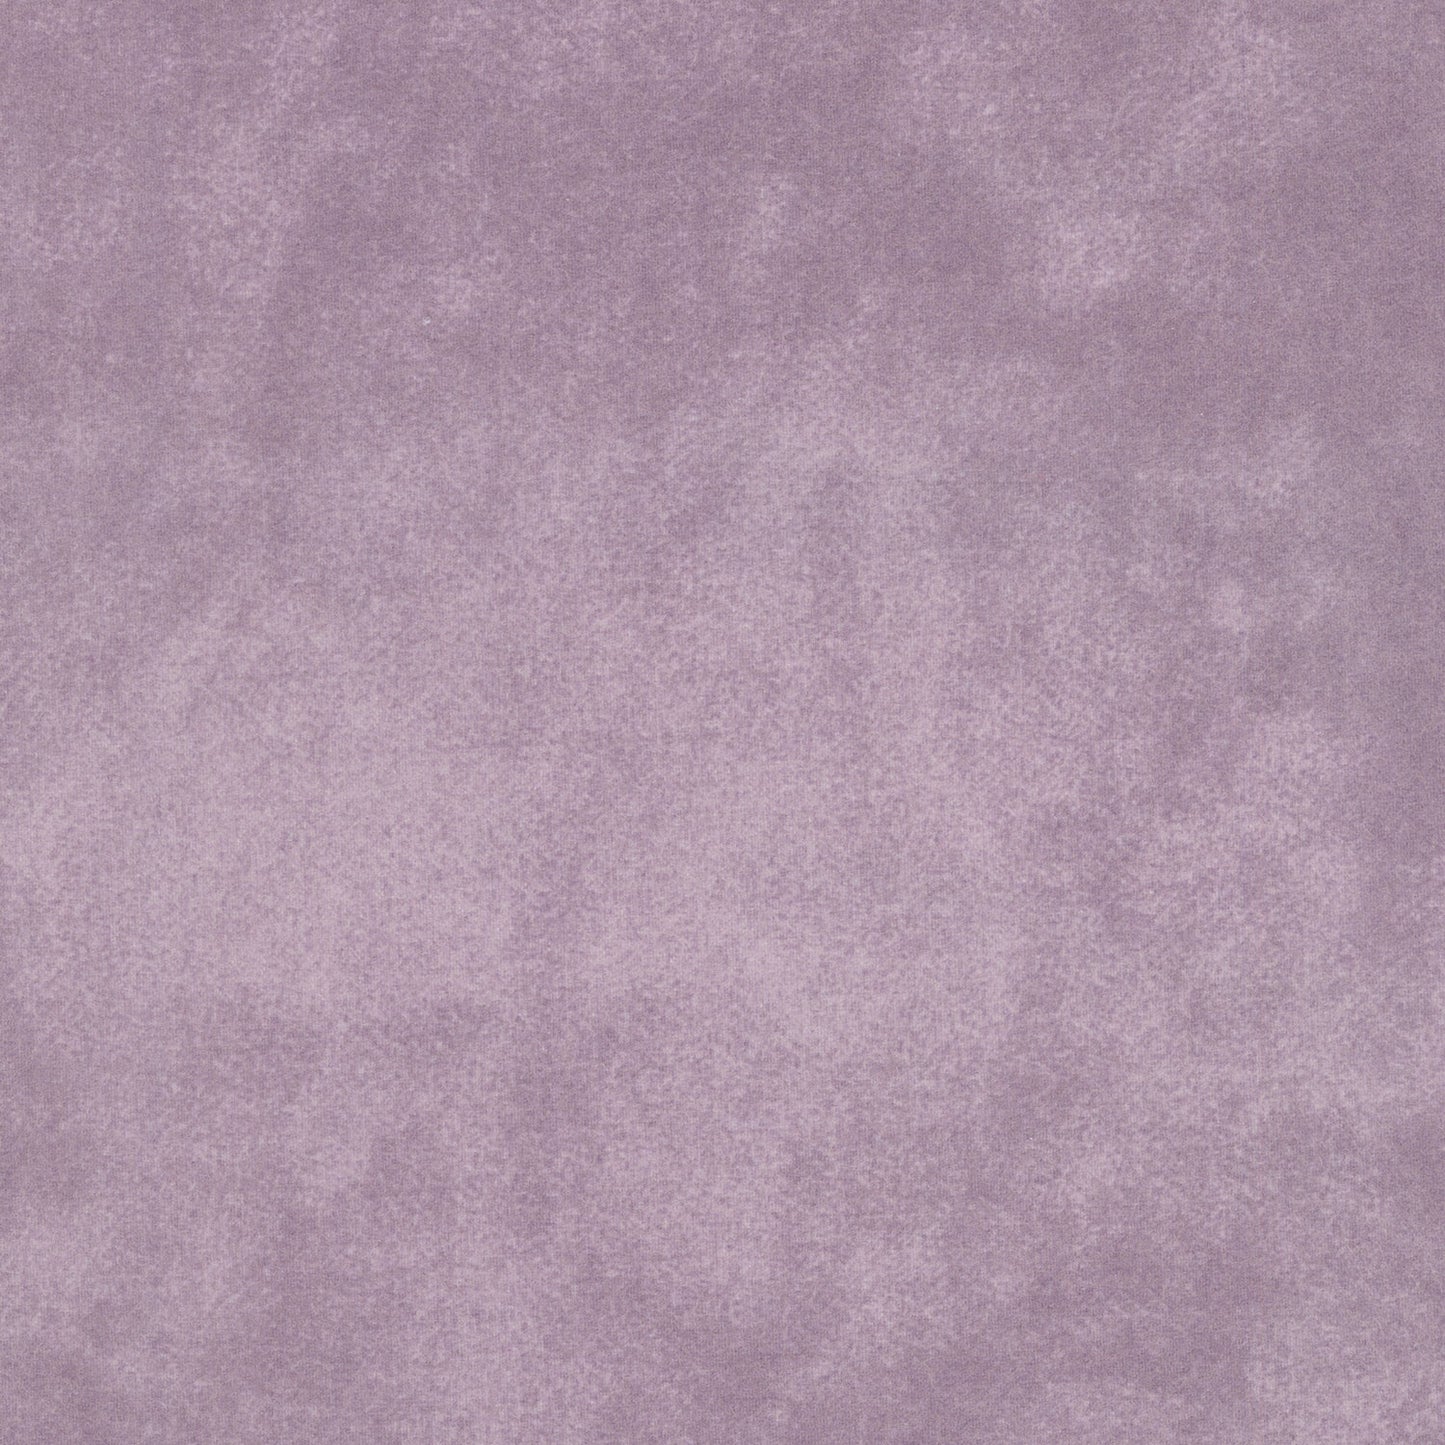 Woolies Flannel - Colorwash - Light Purple Yardage Primary Image